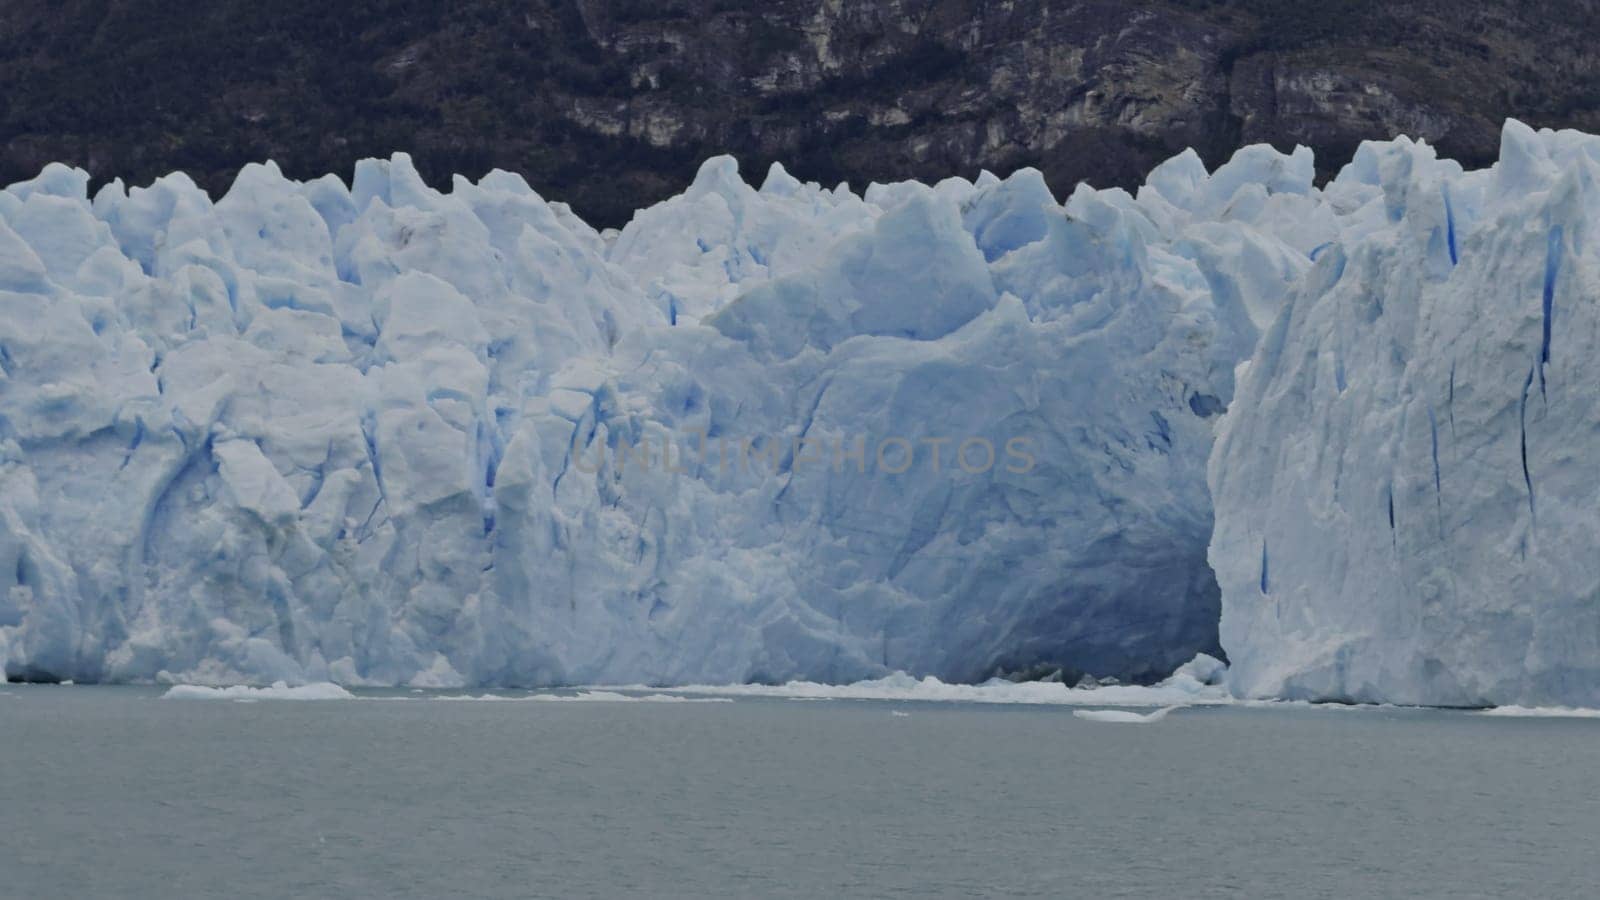 Ice Cave Exploration in Arctic Glacier by Boat by FerradalFCG